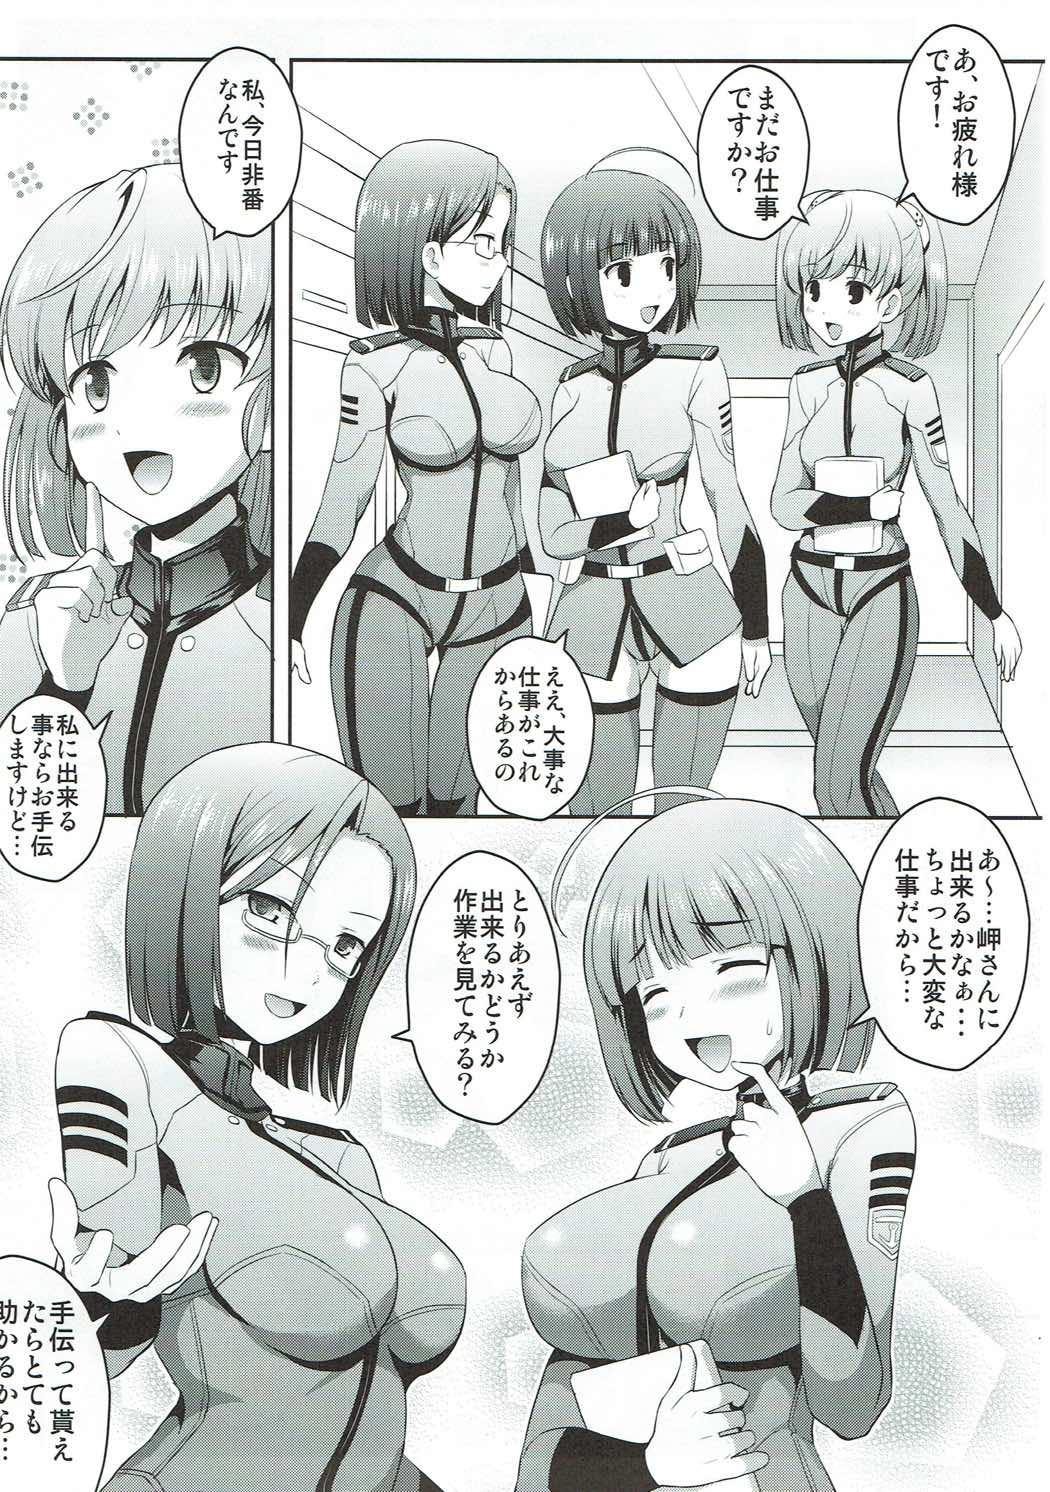 Boobies Uchuu Senkan Yamato Sei Shori ka - Space battleship yamato Reverse Cowgirl - Page 6